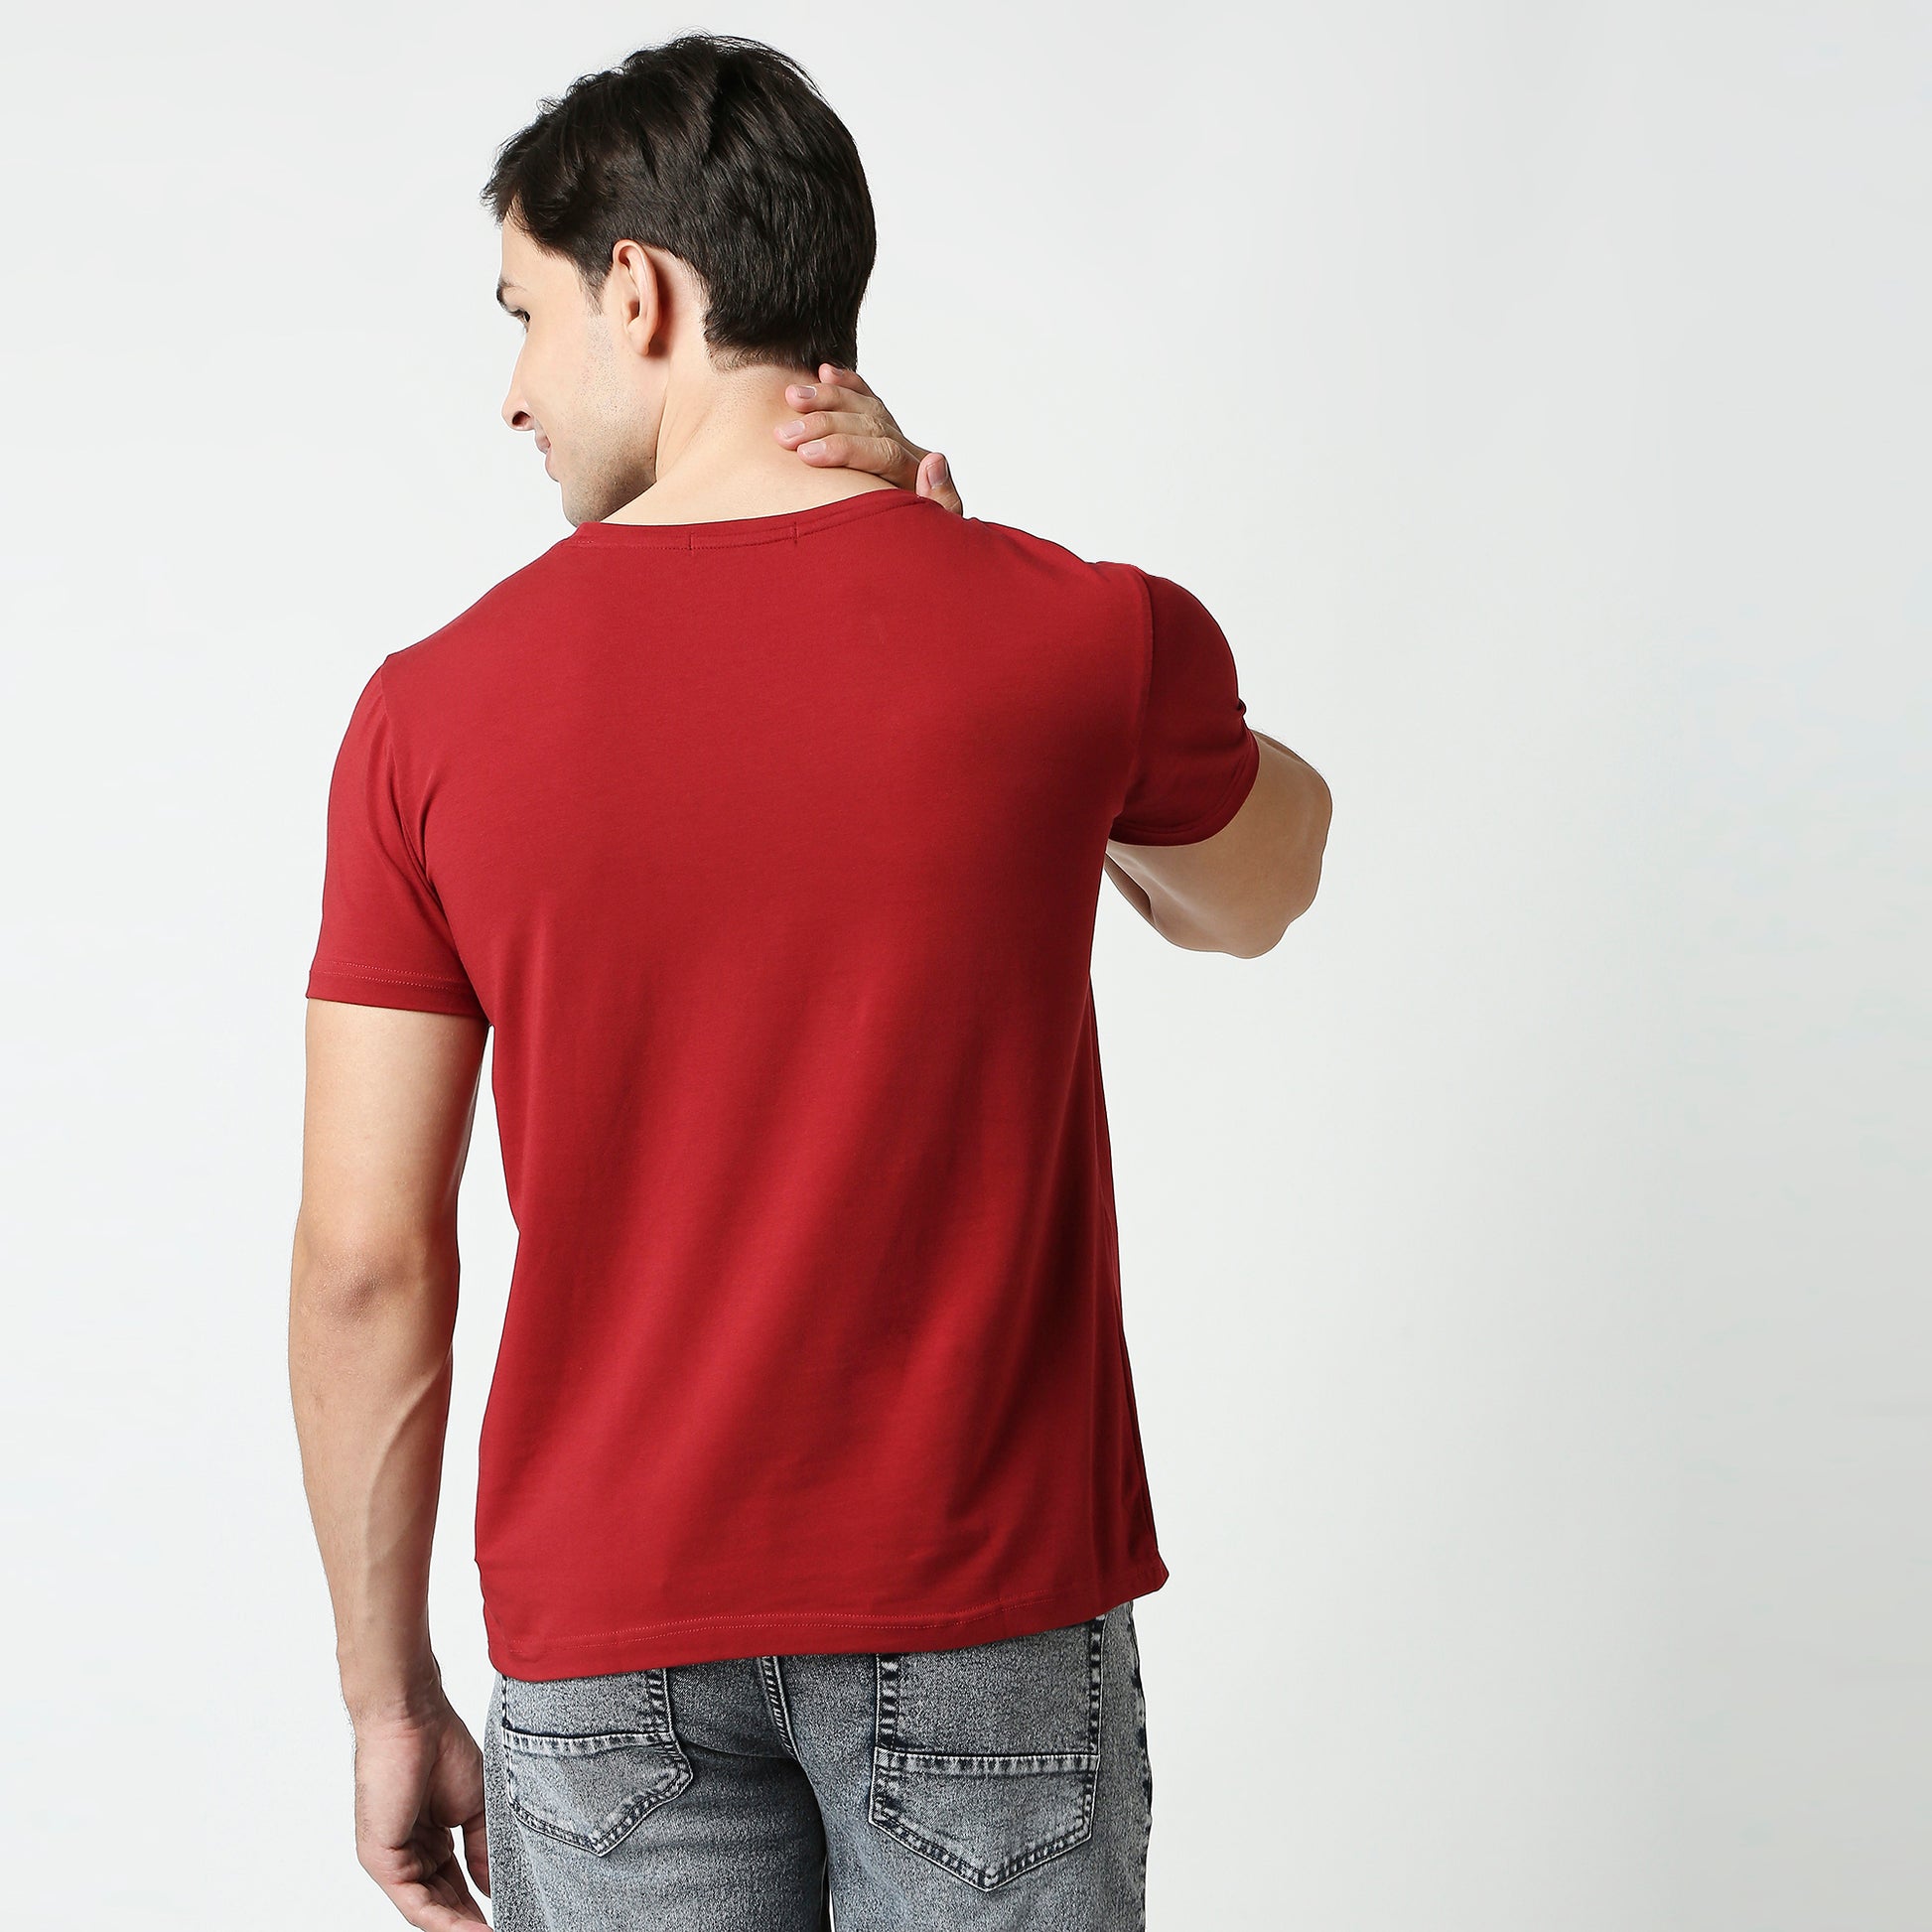 Fostino POCKET SQR round neck t-shirt - Fostino - T-Shirts